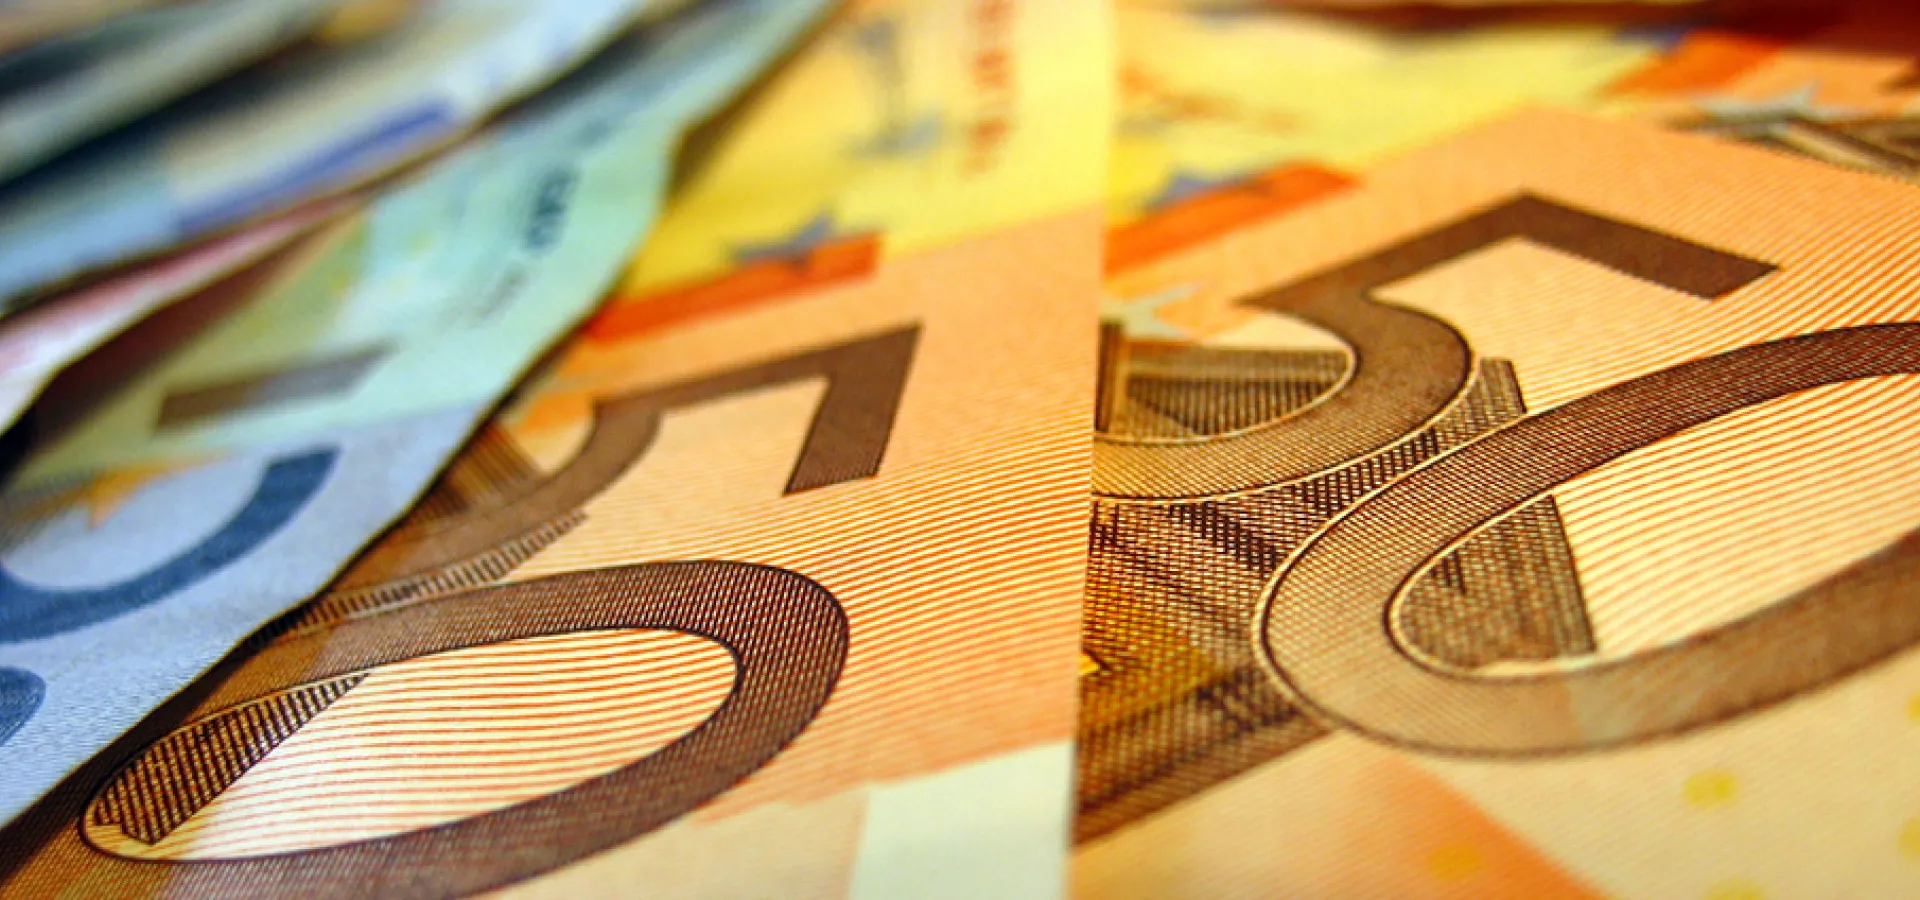 Closeup photo of a range of euro notes